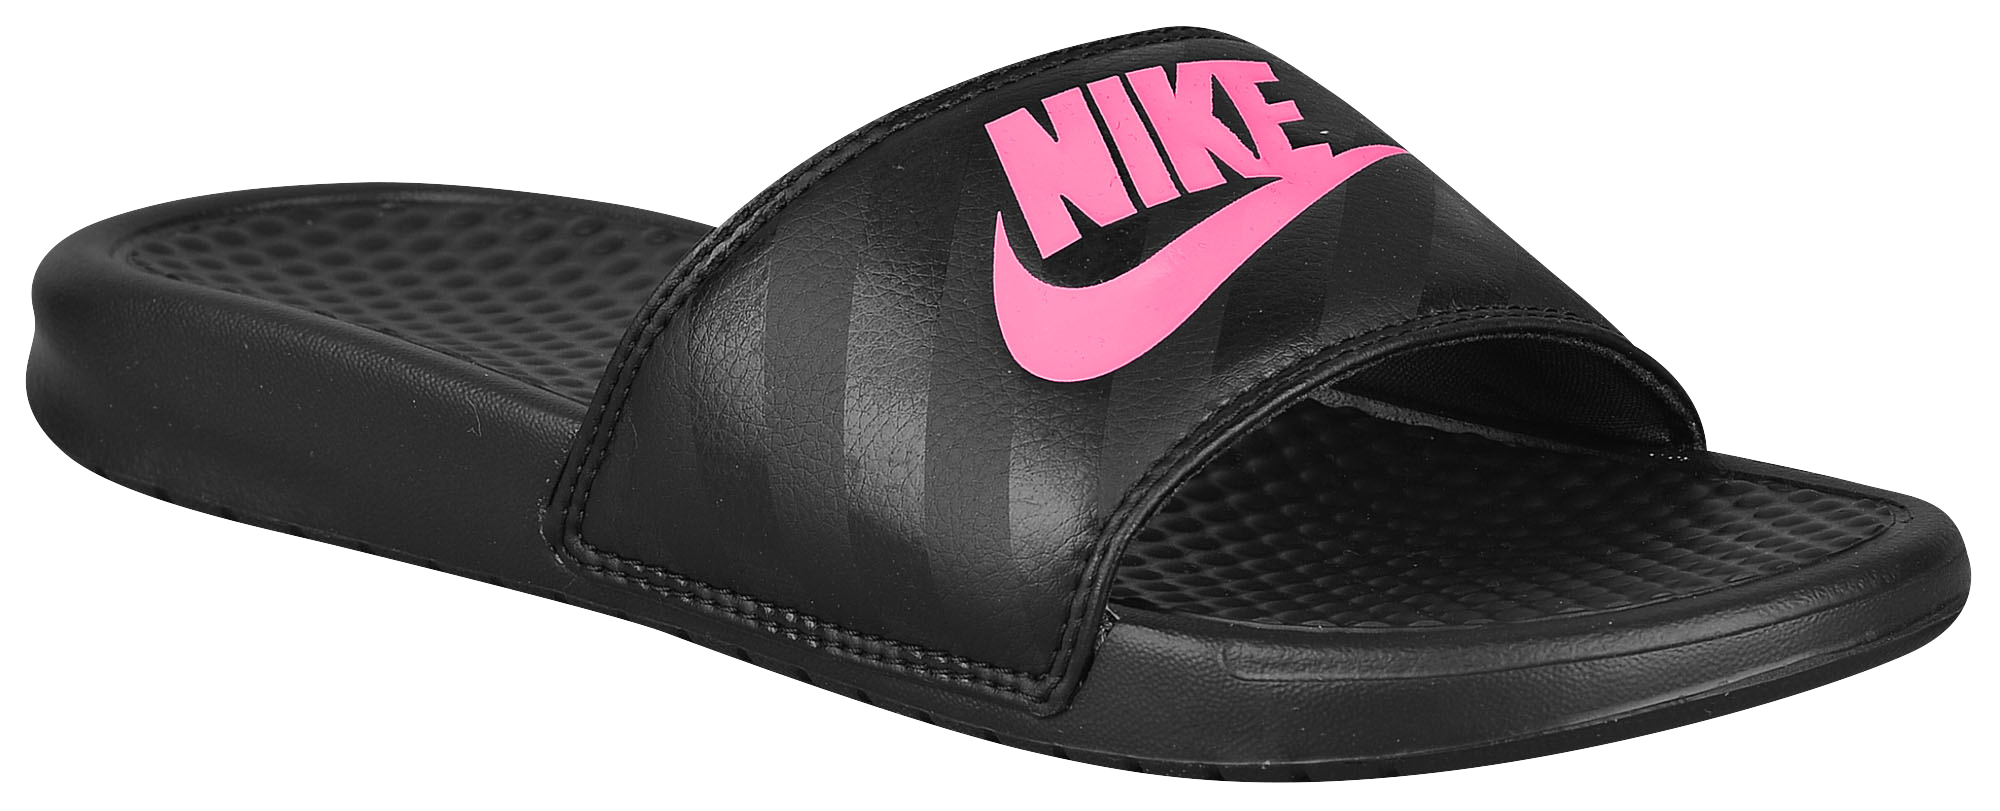 nike sandals womens foot locker